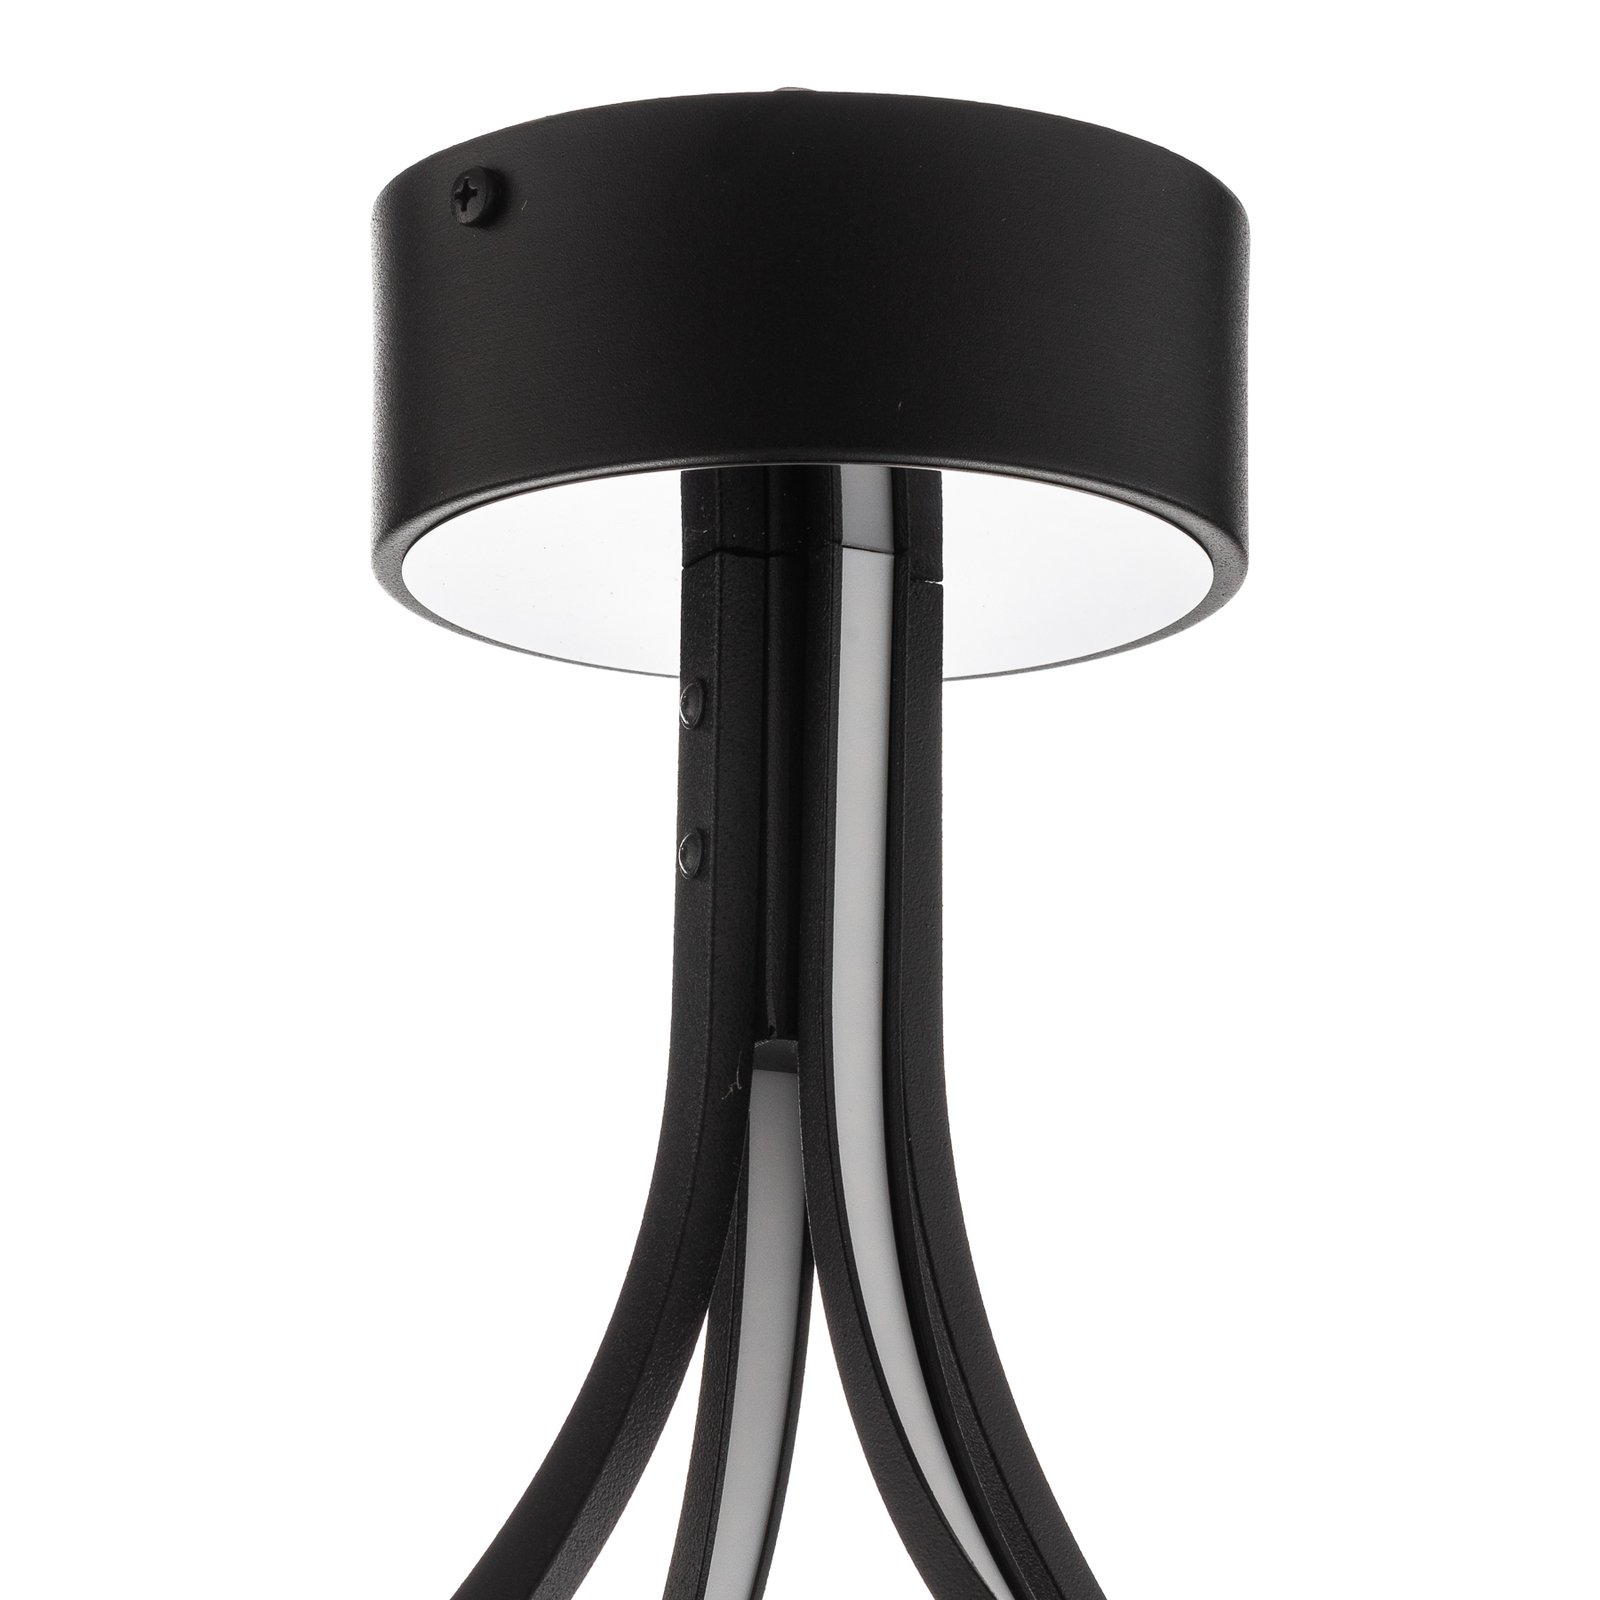 LED plafondlamp Lungo zwart, hoogte 42cm